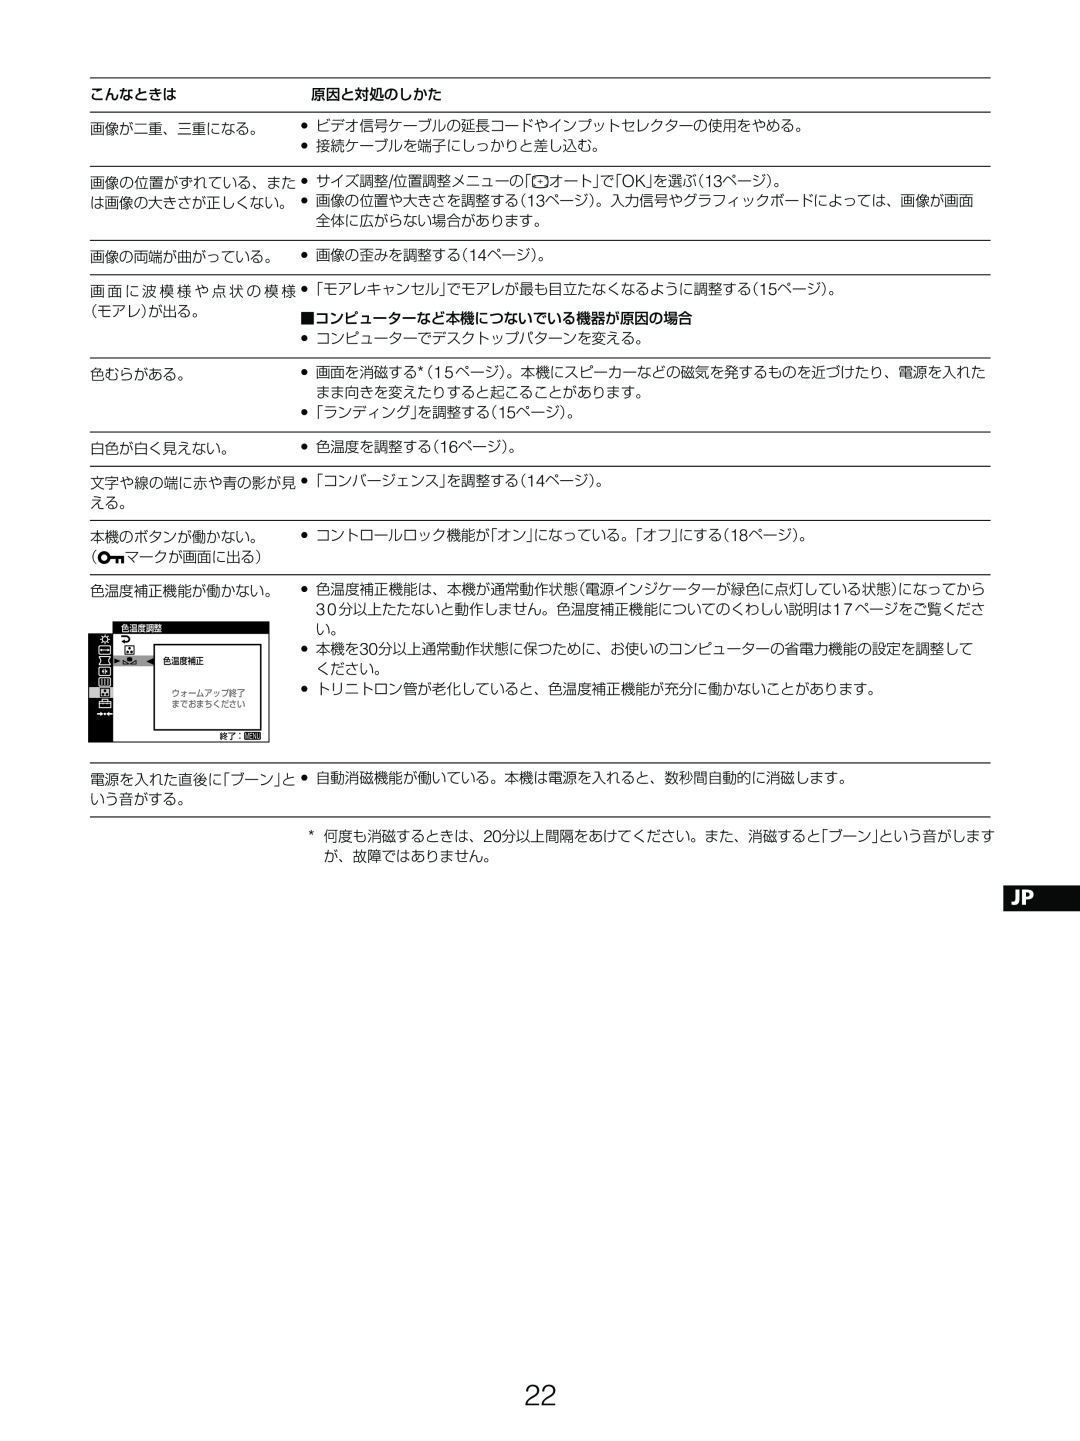 Sony GDM-5510 operating instructions 